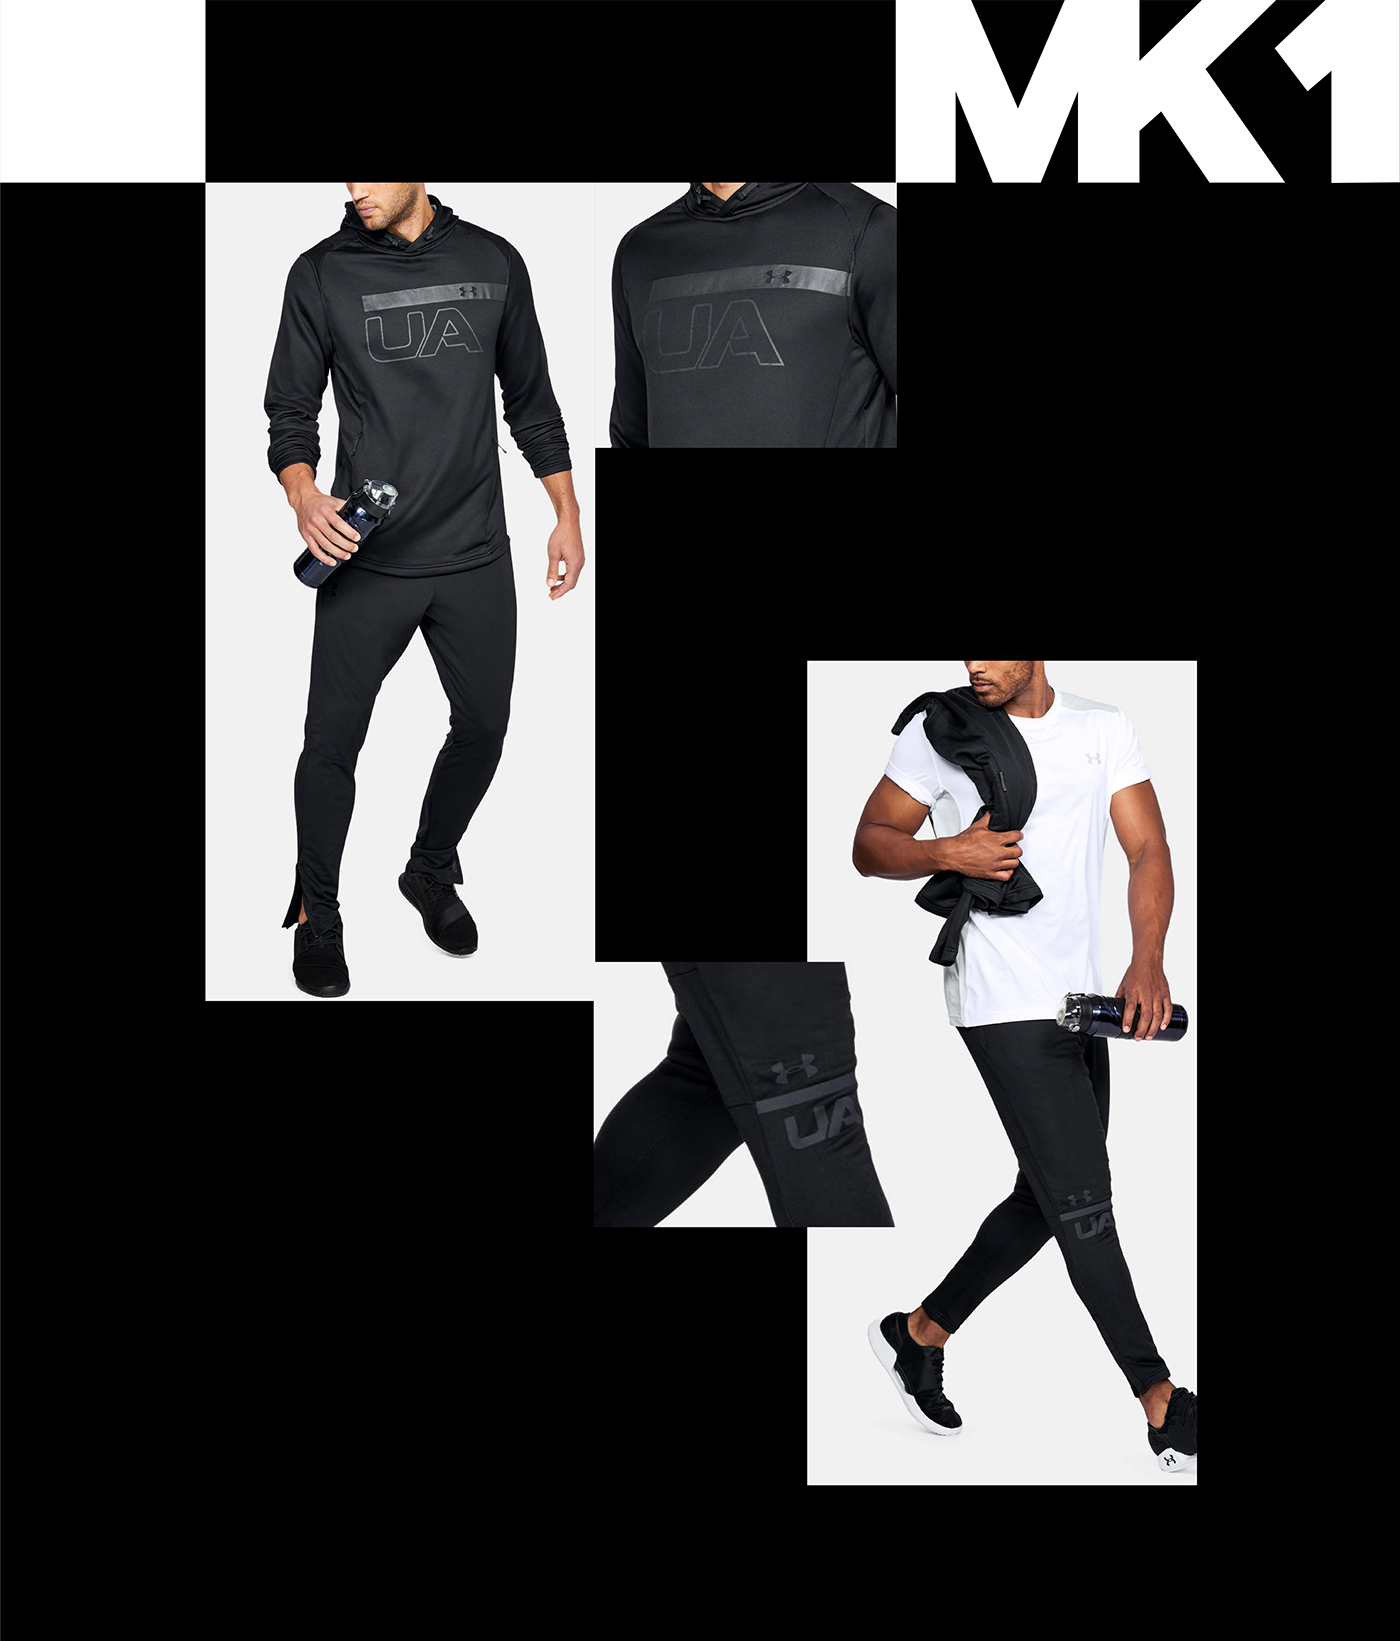 Under Armour mk1 jake galloway SCAD type font Nike adidas kith supreme